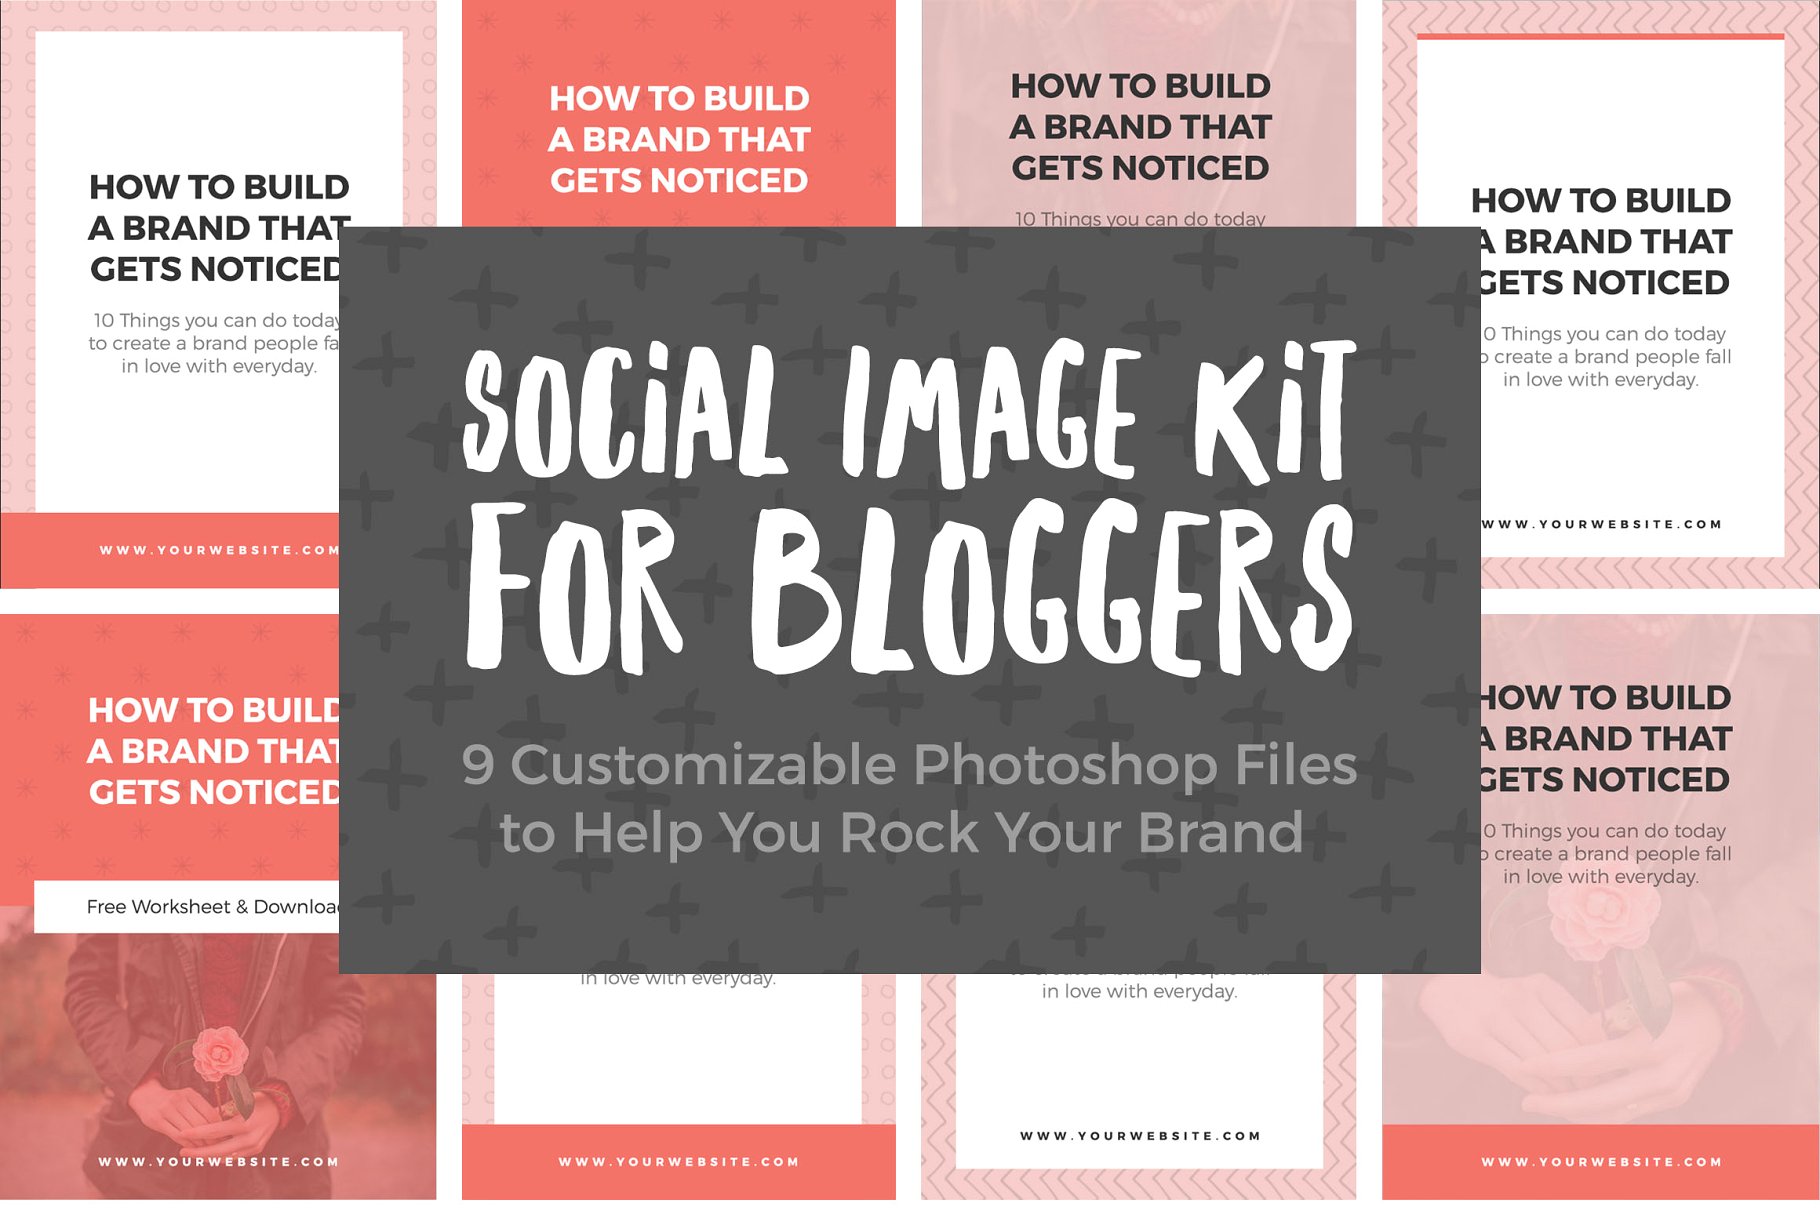 新媒体社交媒体贴图设计素材包 Social Image Kit for Bloggers插图